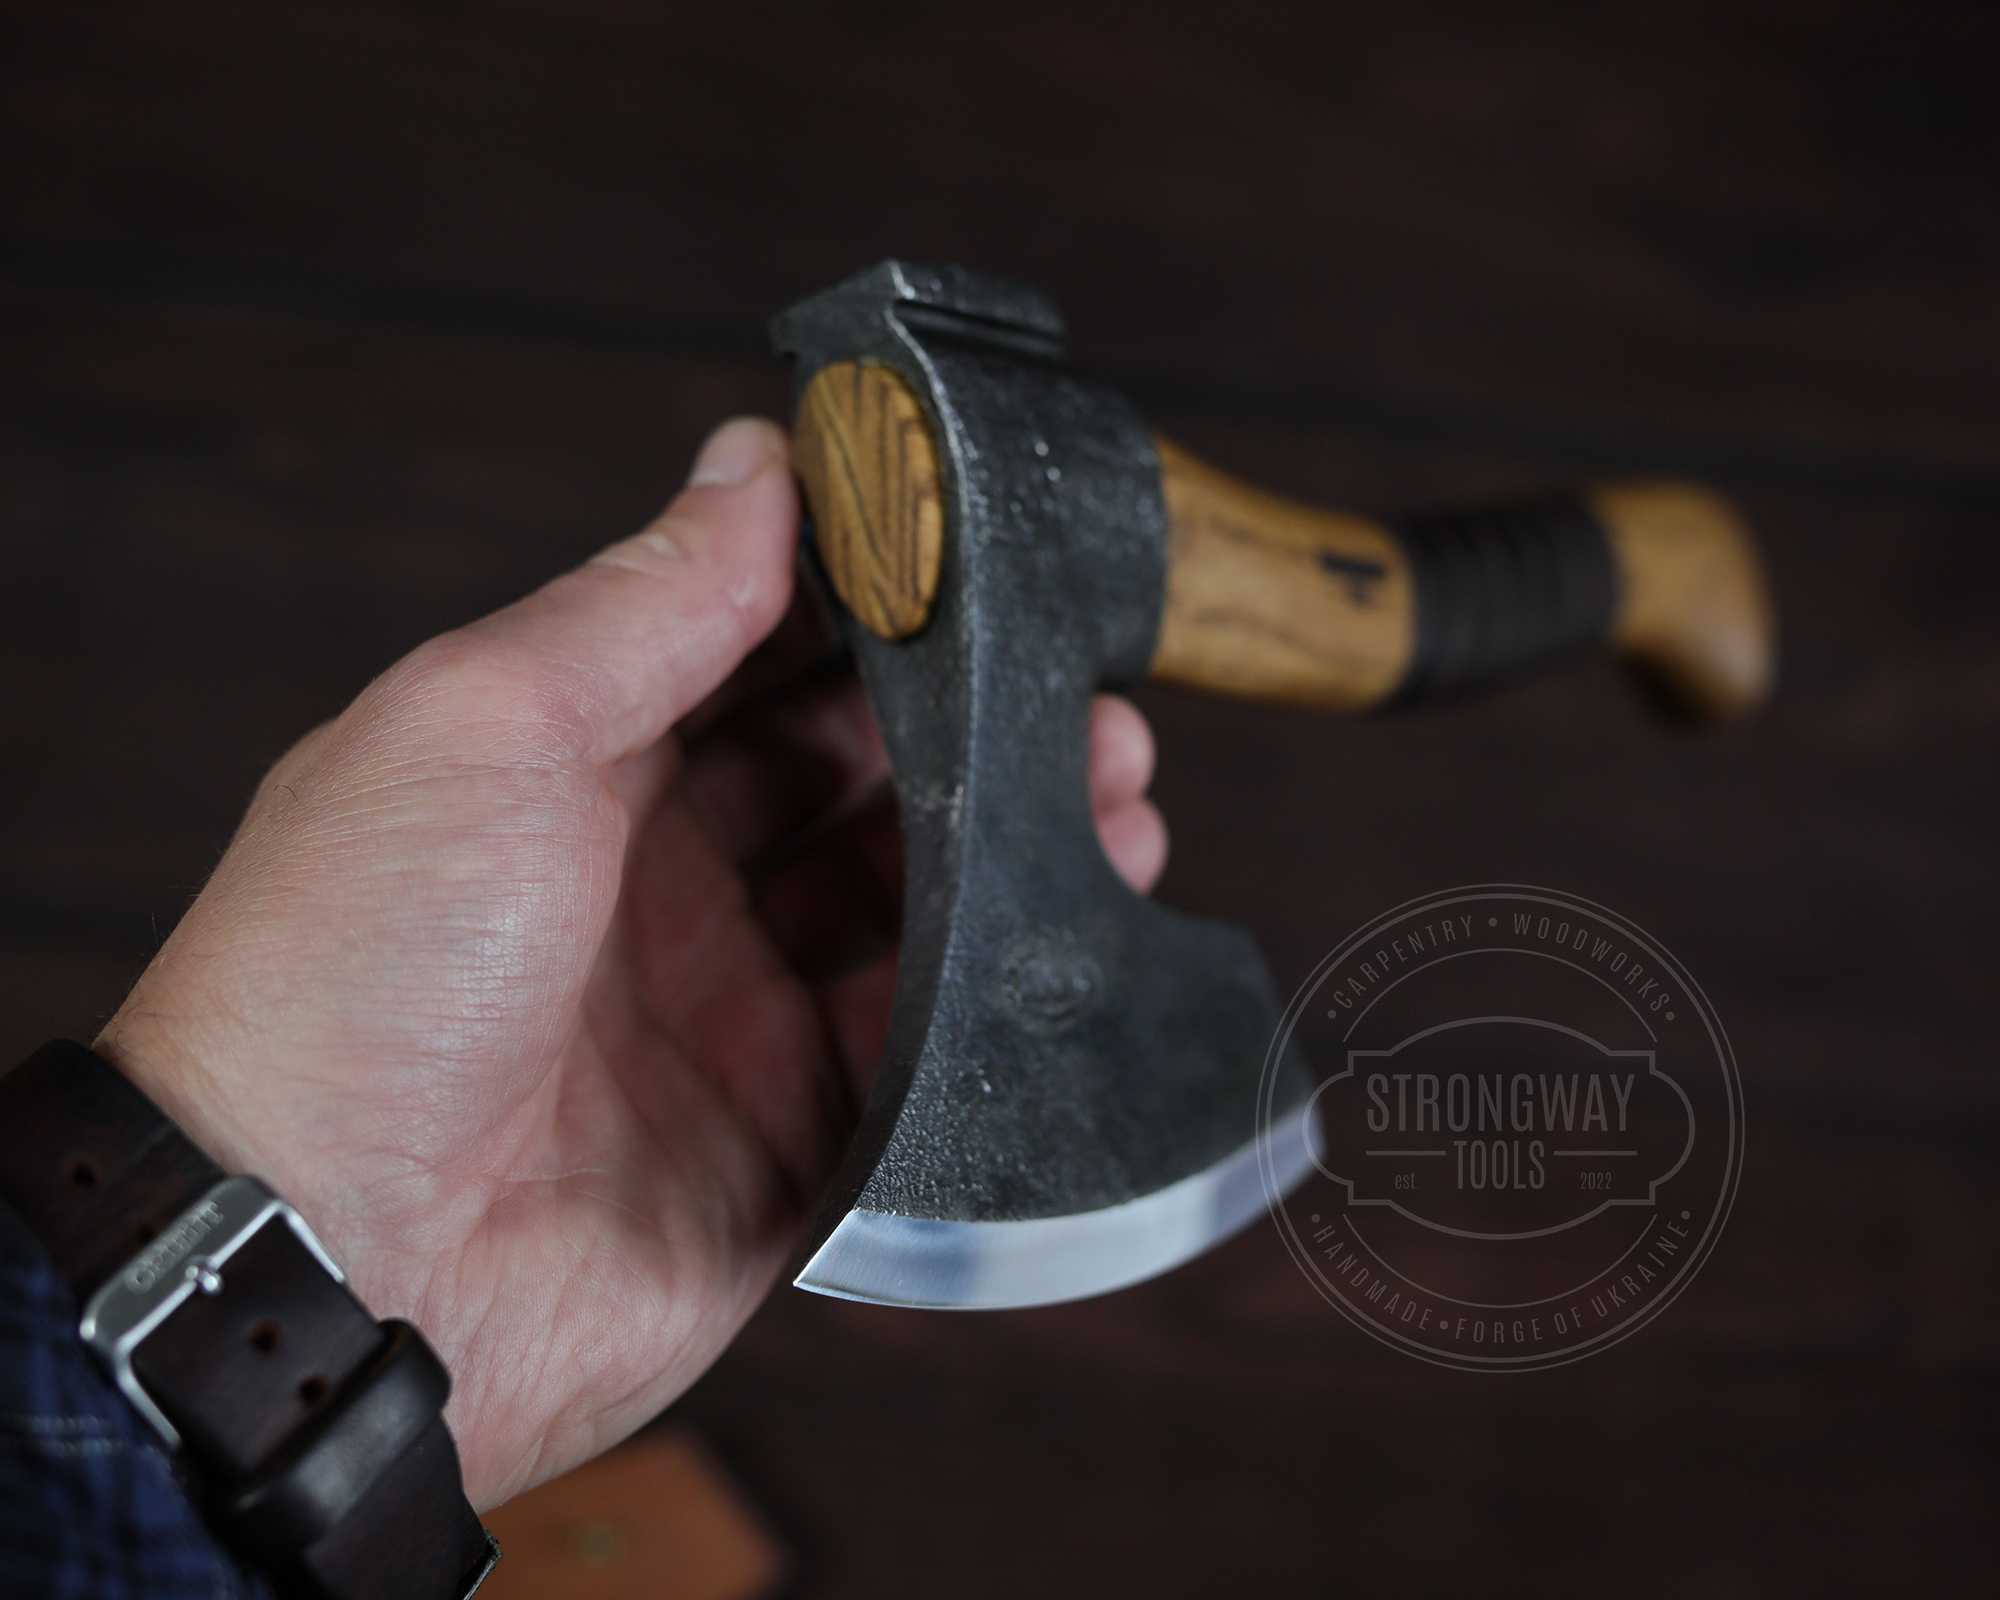 Wood carving axe, hand carpentry tool STRYI, Profi – Wood carving